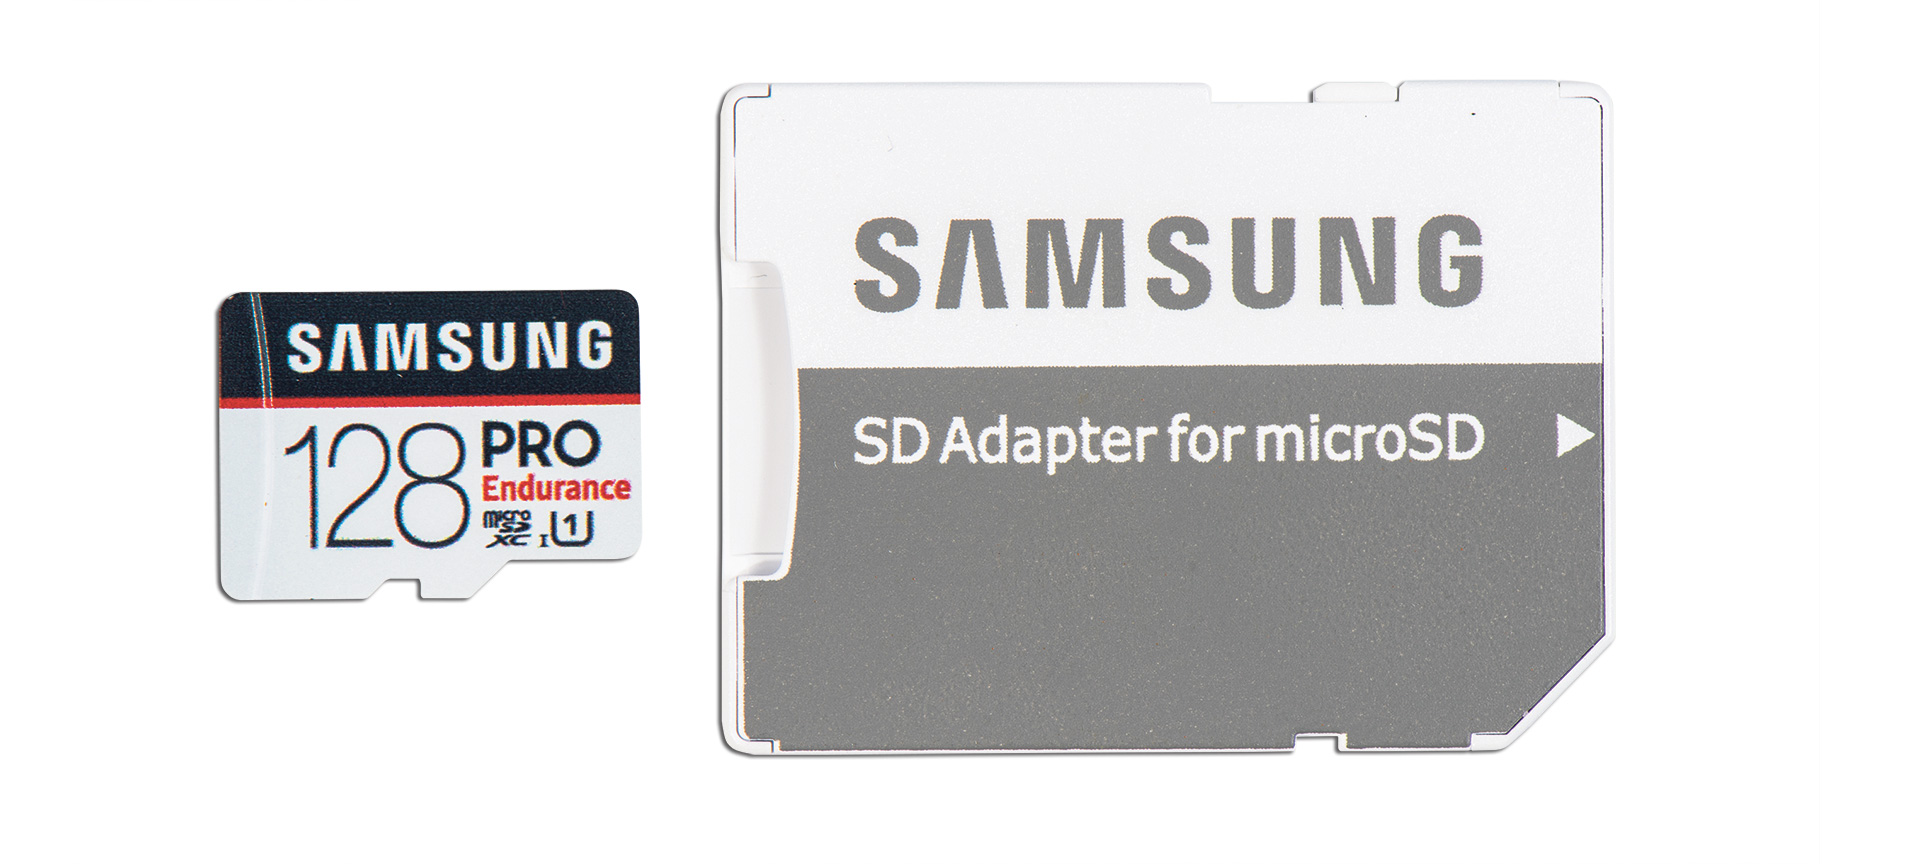 Microsdxc samsung 128gb. Samsung Pro Endurance MICROSD. Samsung Pro Endurance 128gb. Samsung MICROSD Adapter. MICROSD  Kingston Endurance.